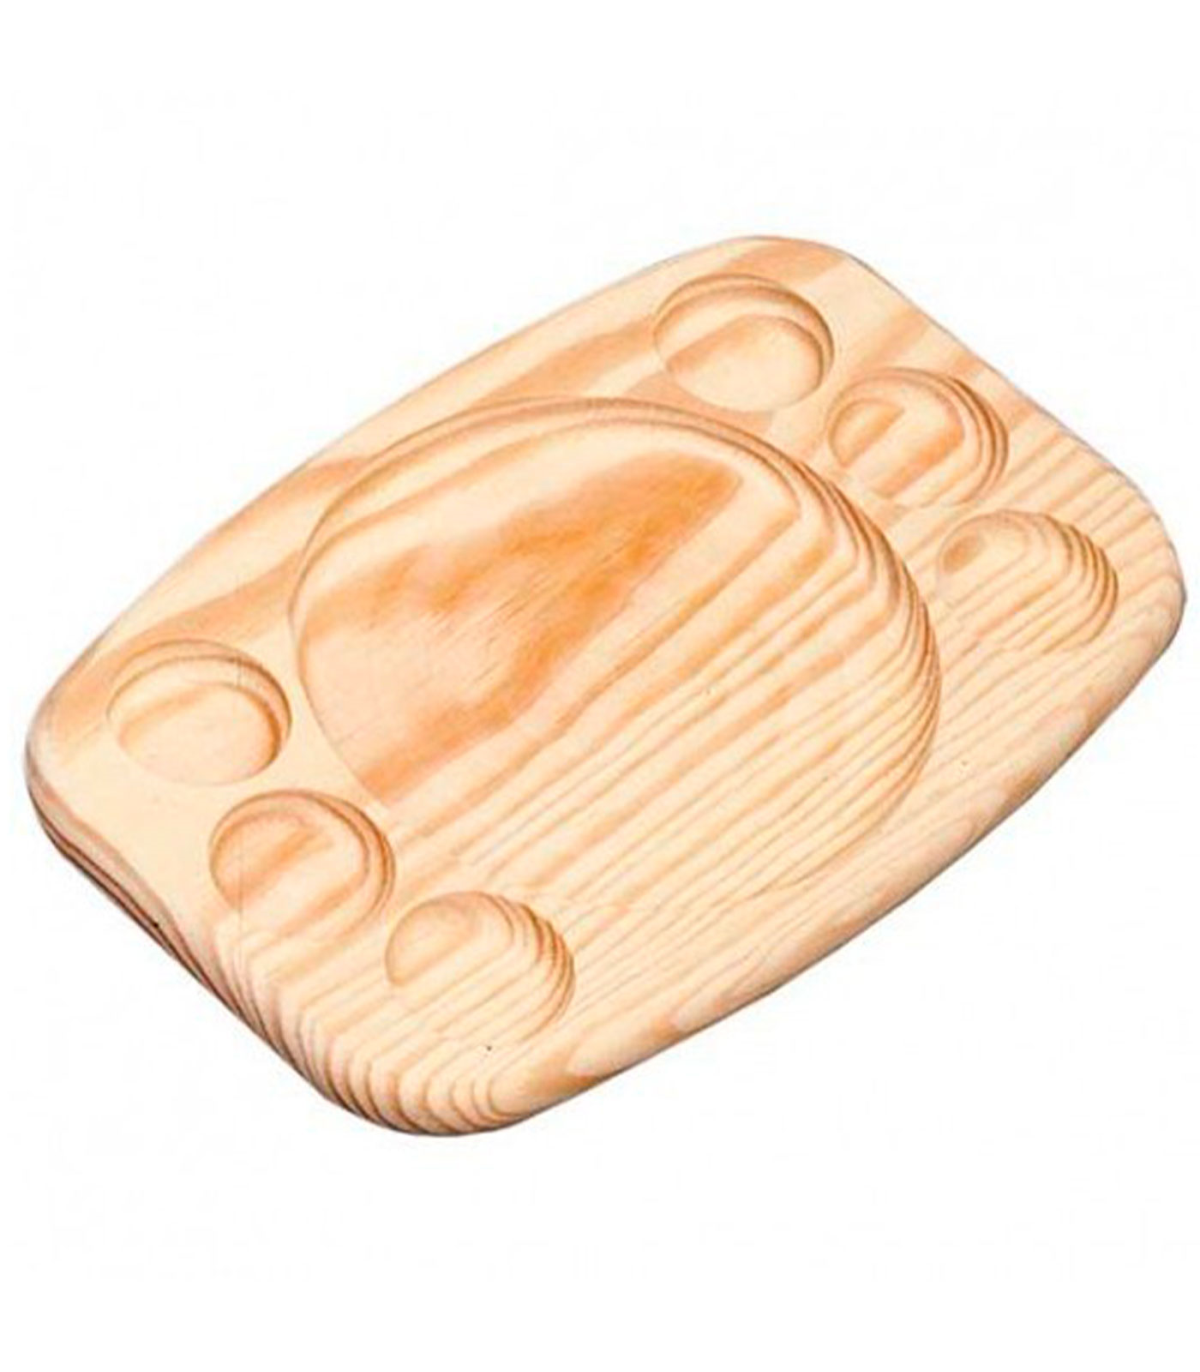 Tradineur - Bandeja de madera ovalada, plato, tabla para servir comida con  3 huecos para salsas, madera natural, churrasco, aper